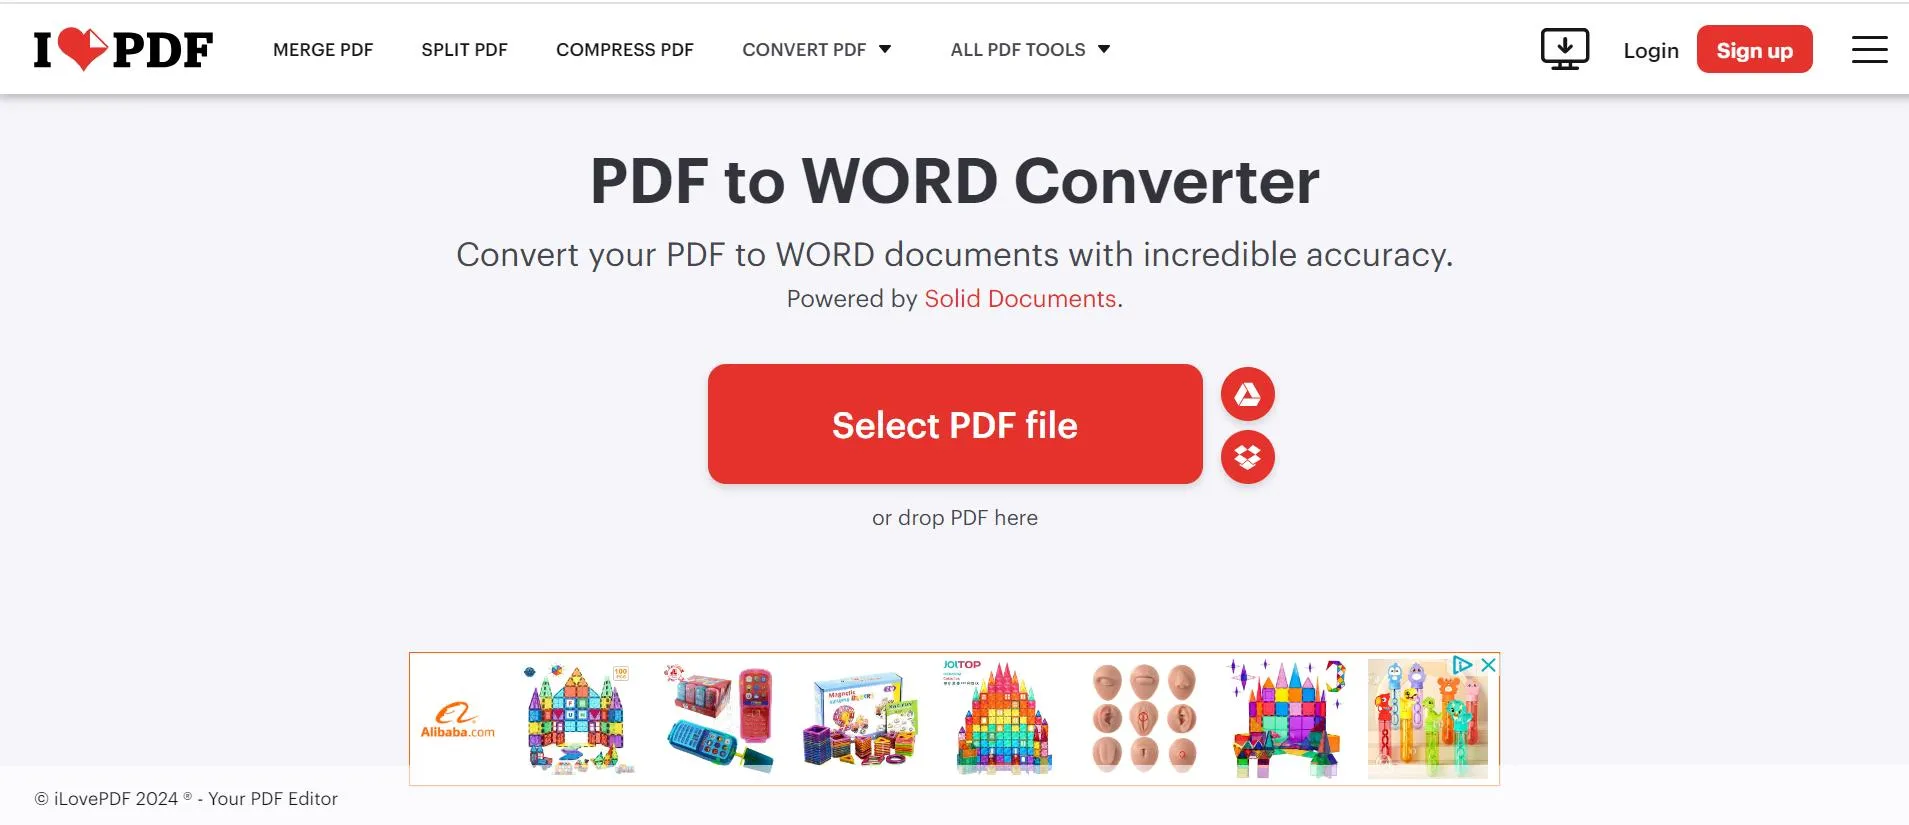 upload PDF to iLovePDF to convert PDF to Word on Mac